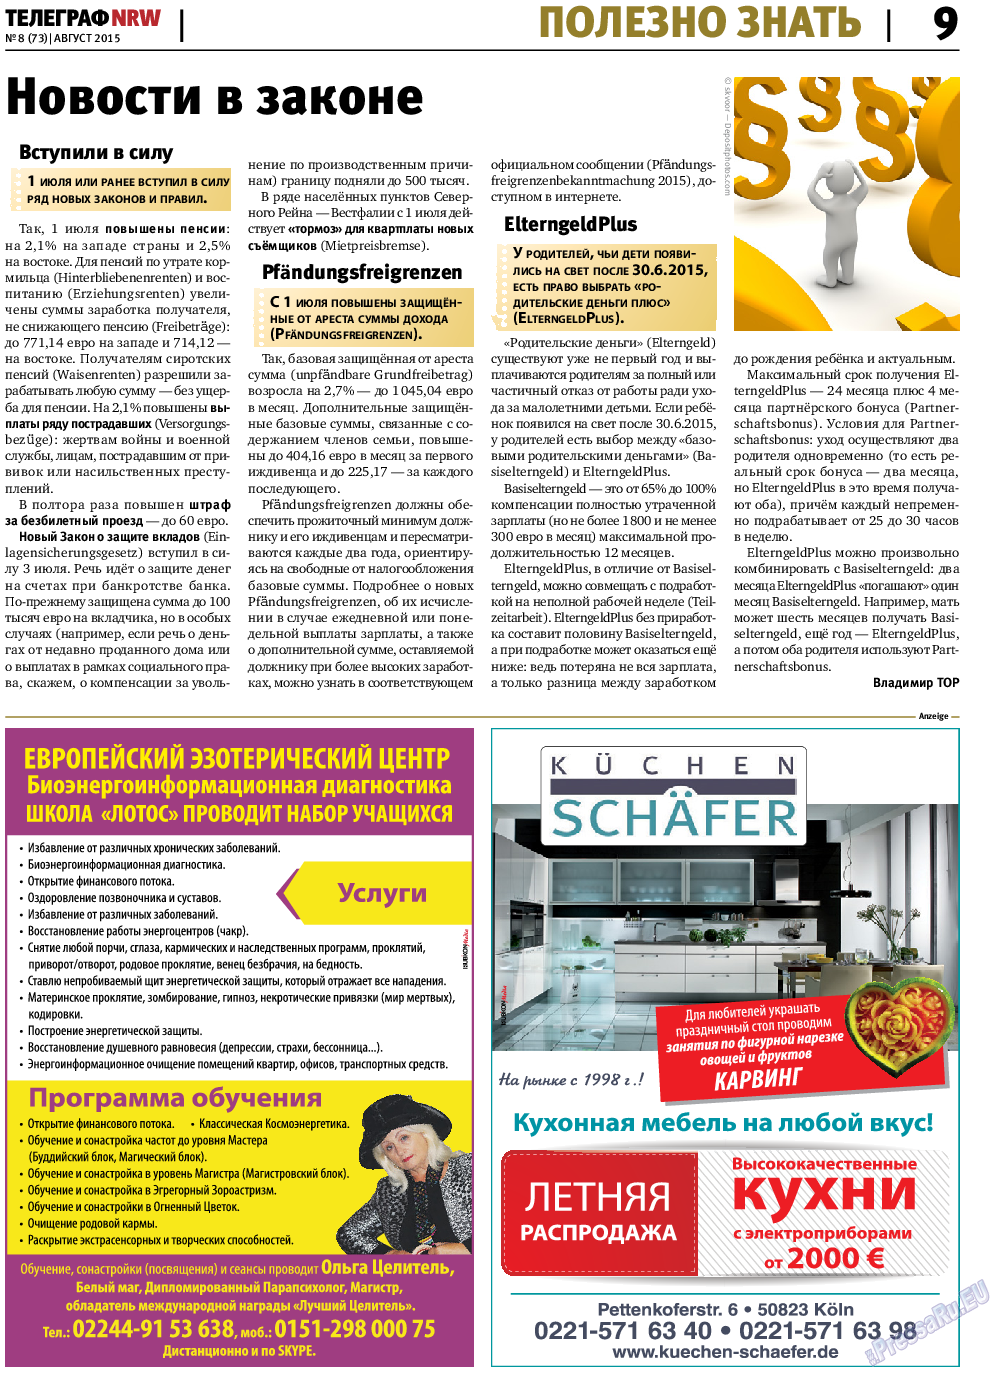 Телеграф NRW, газета. 2015 №8 стр.9